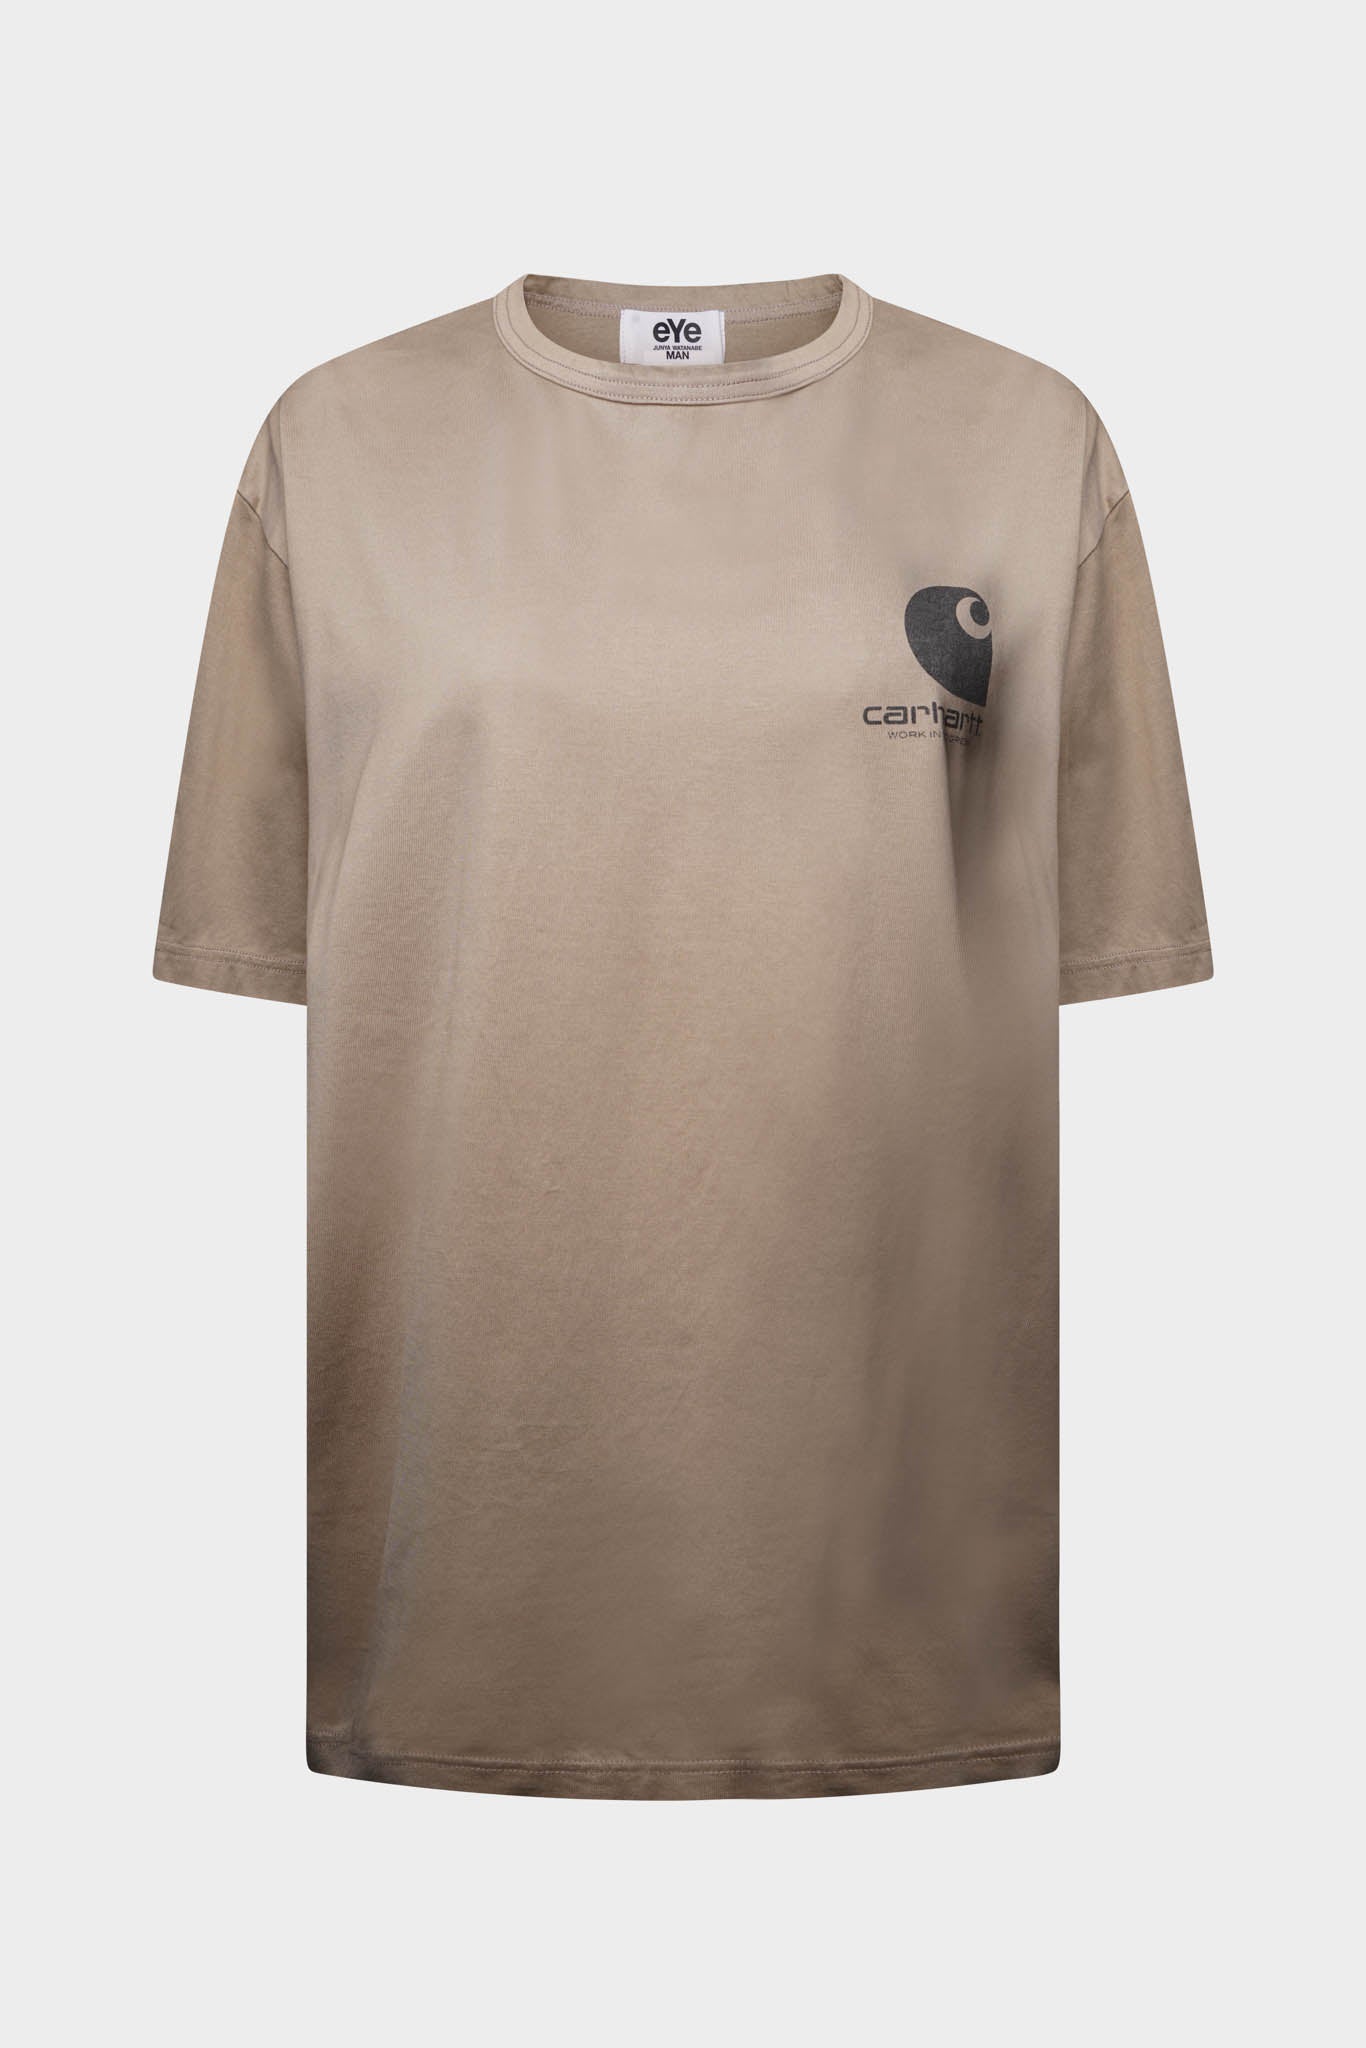 Selectshop FRAME - JUNYA WATANABE MAN T-Shirt T-Shirts Dubai